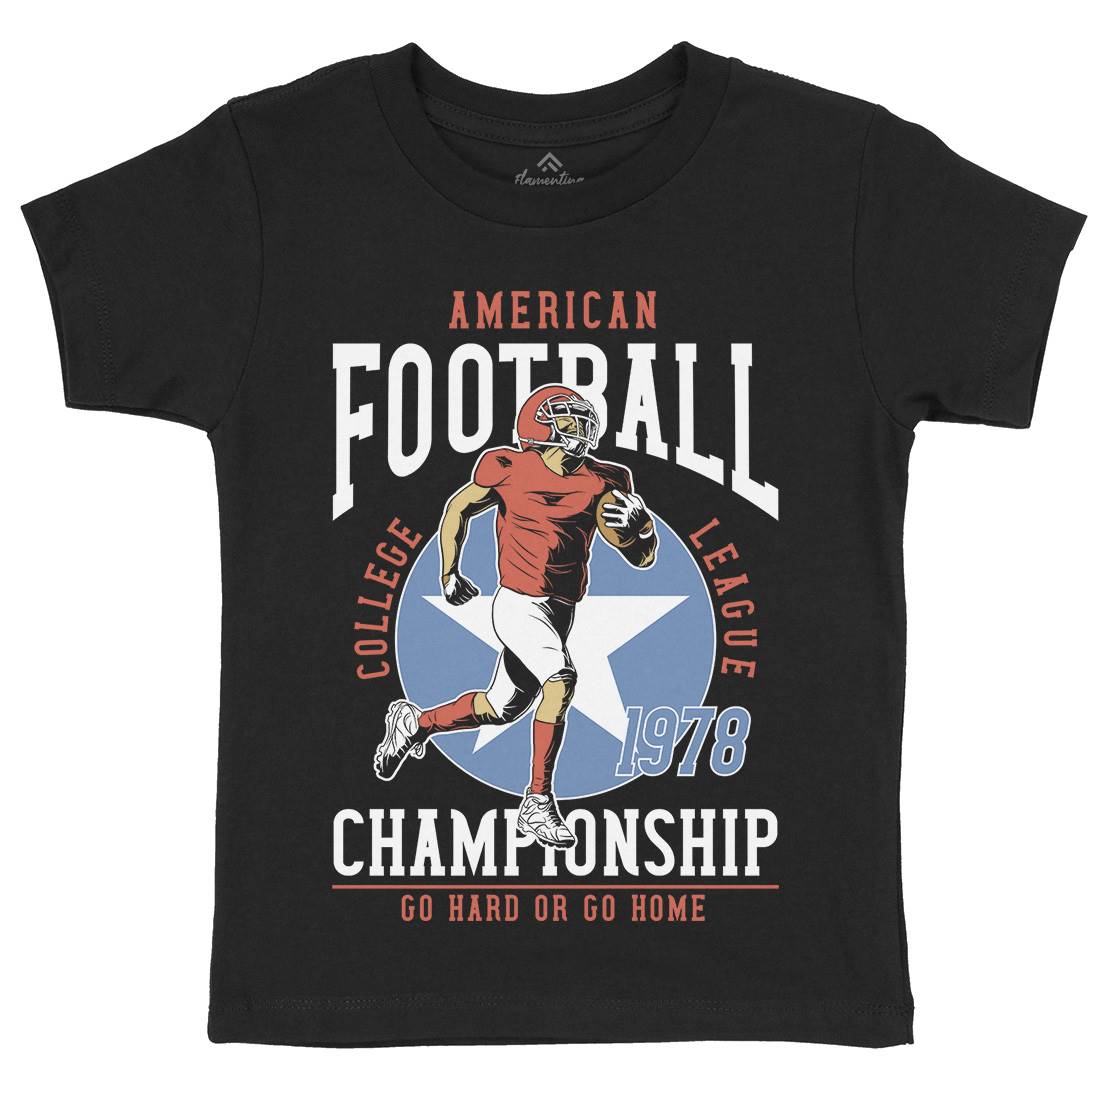 American Football Kids Organic Crew Neck T-Shirt Sport C833